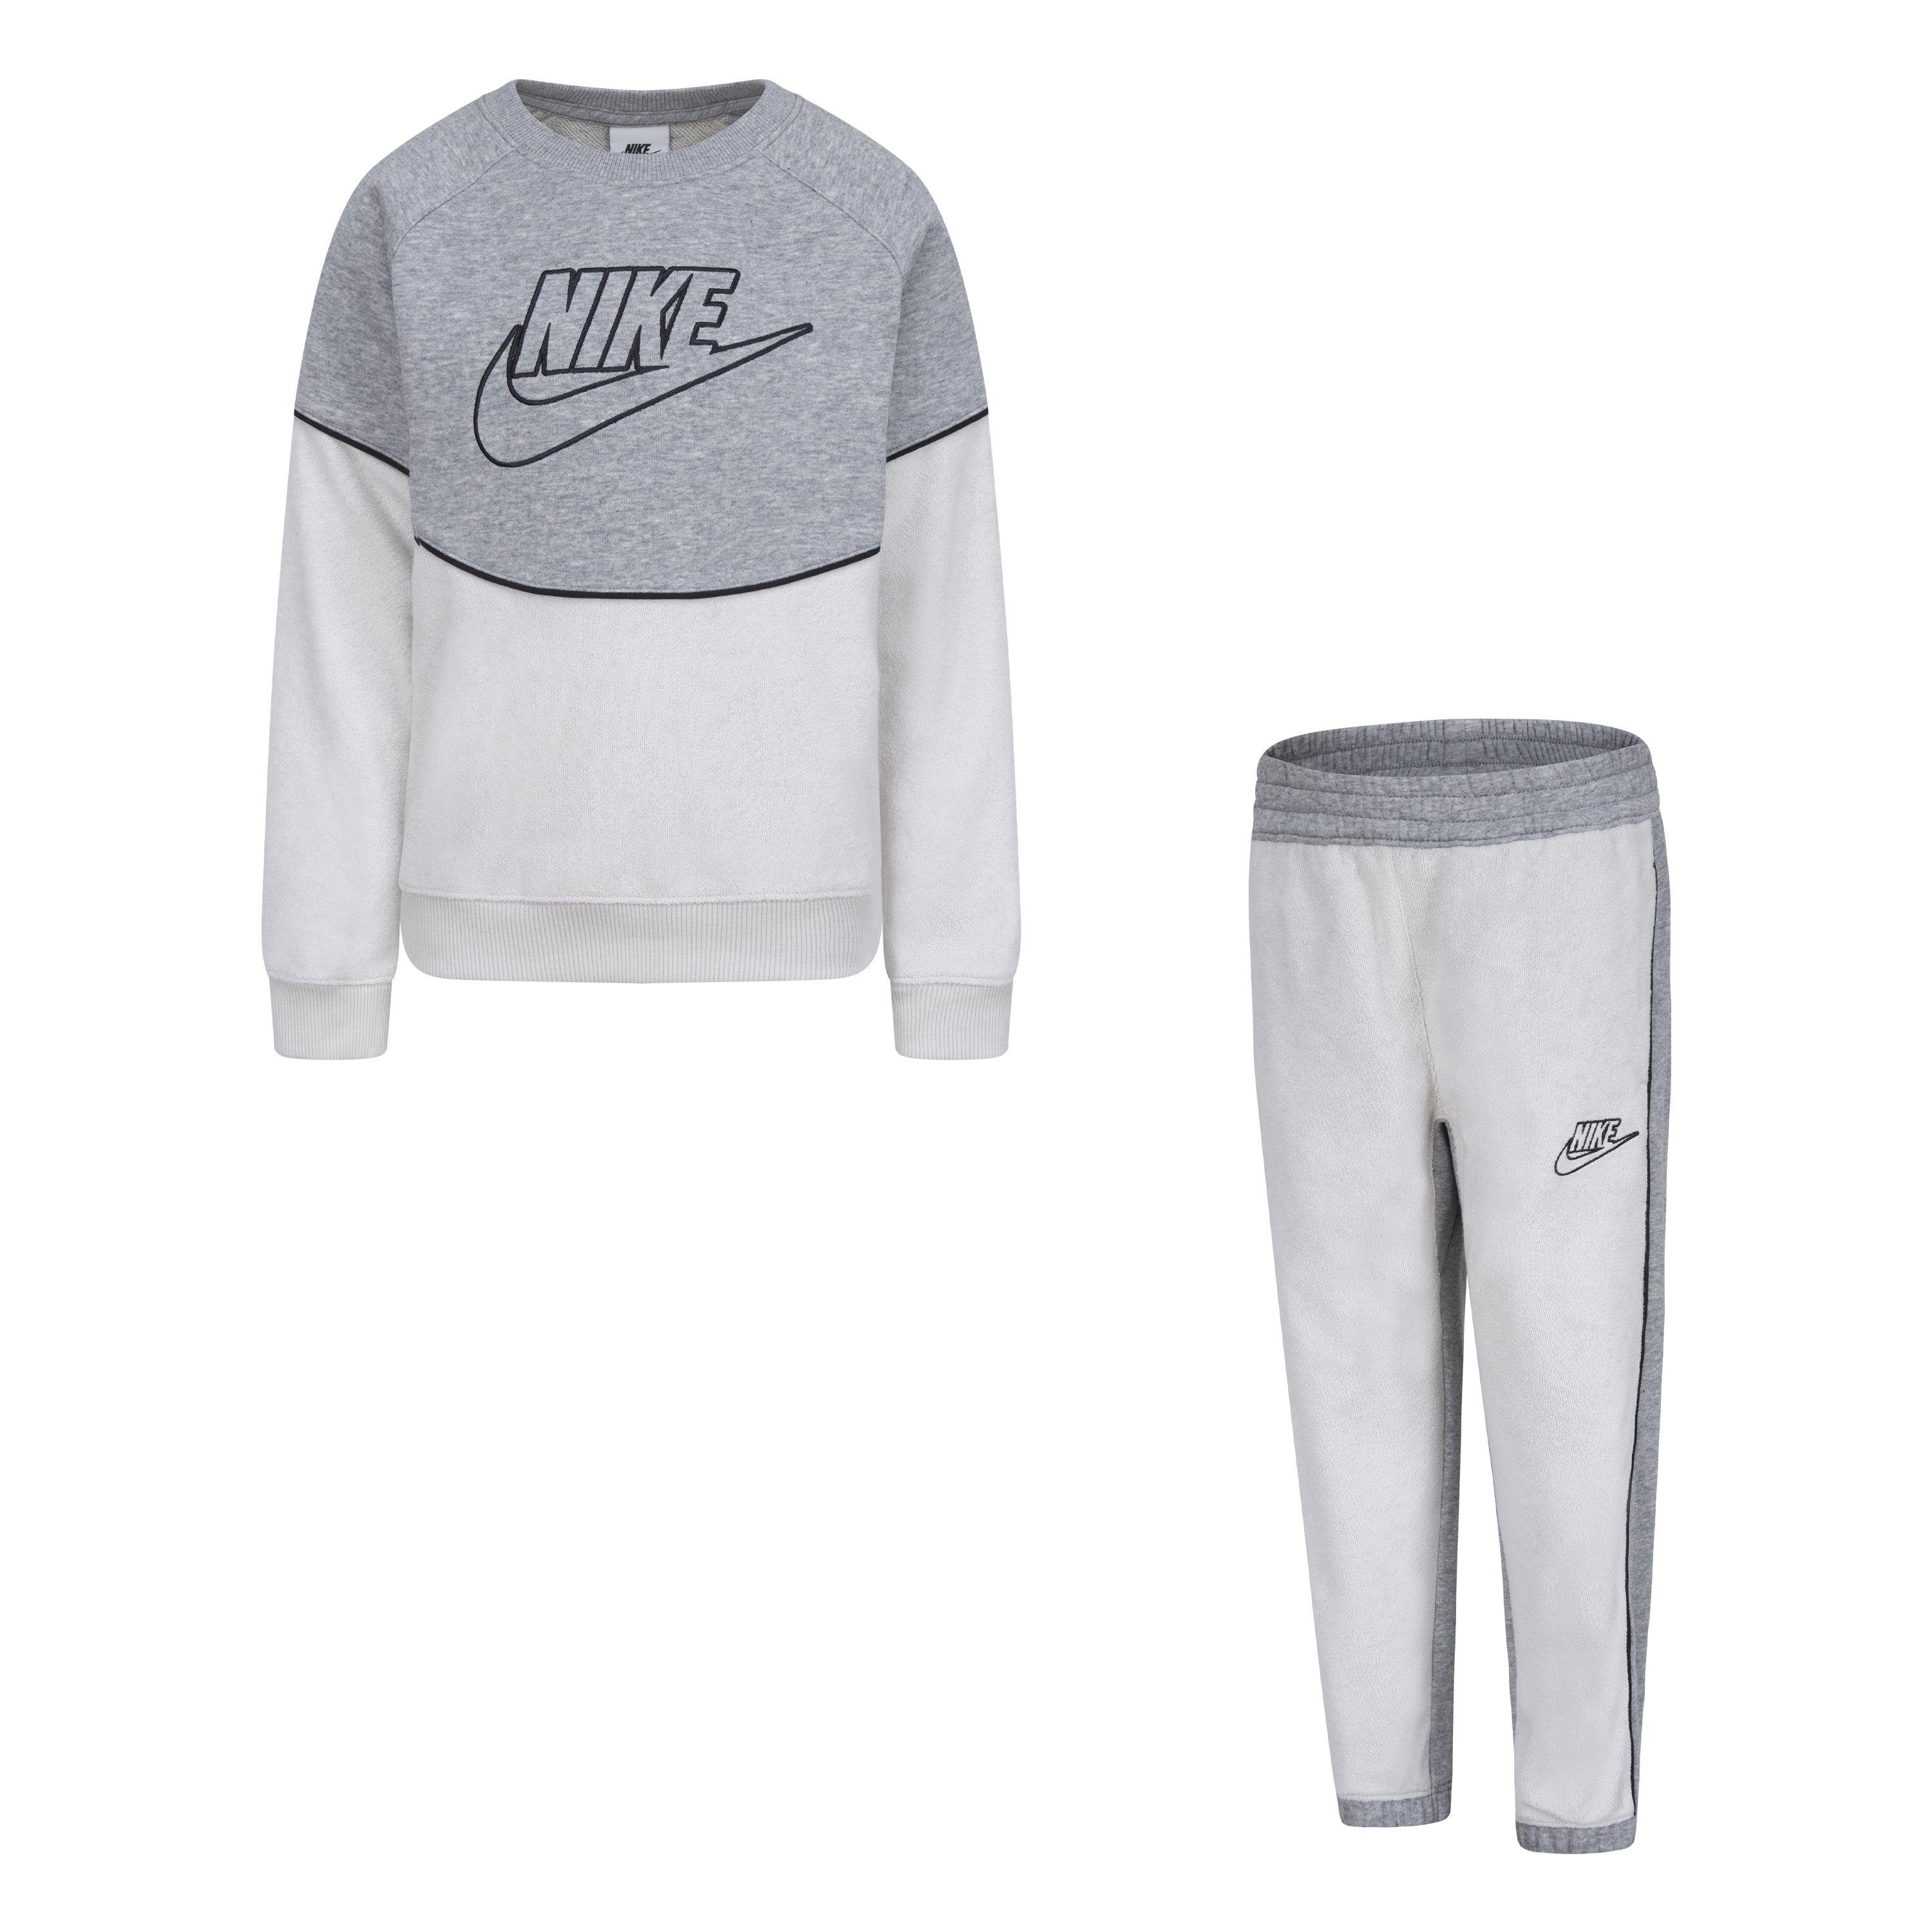 Versandhandel usw. Nike Sportswear grey (Set, 2-tlg) Jogginganzug